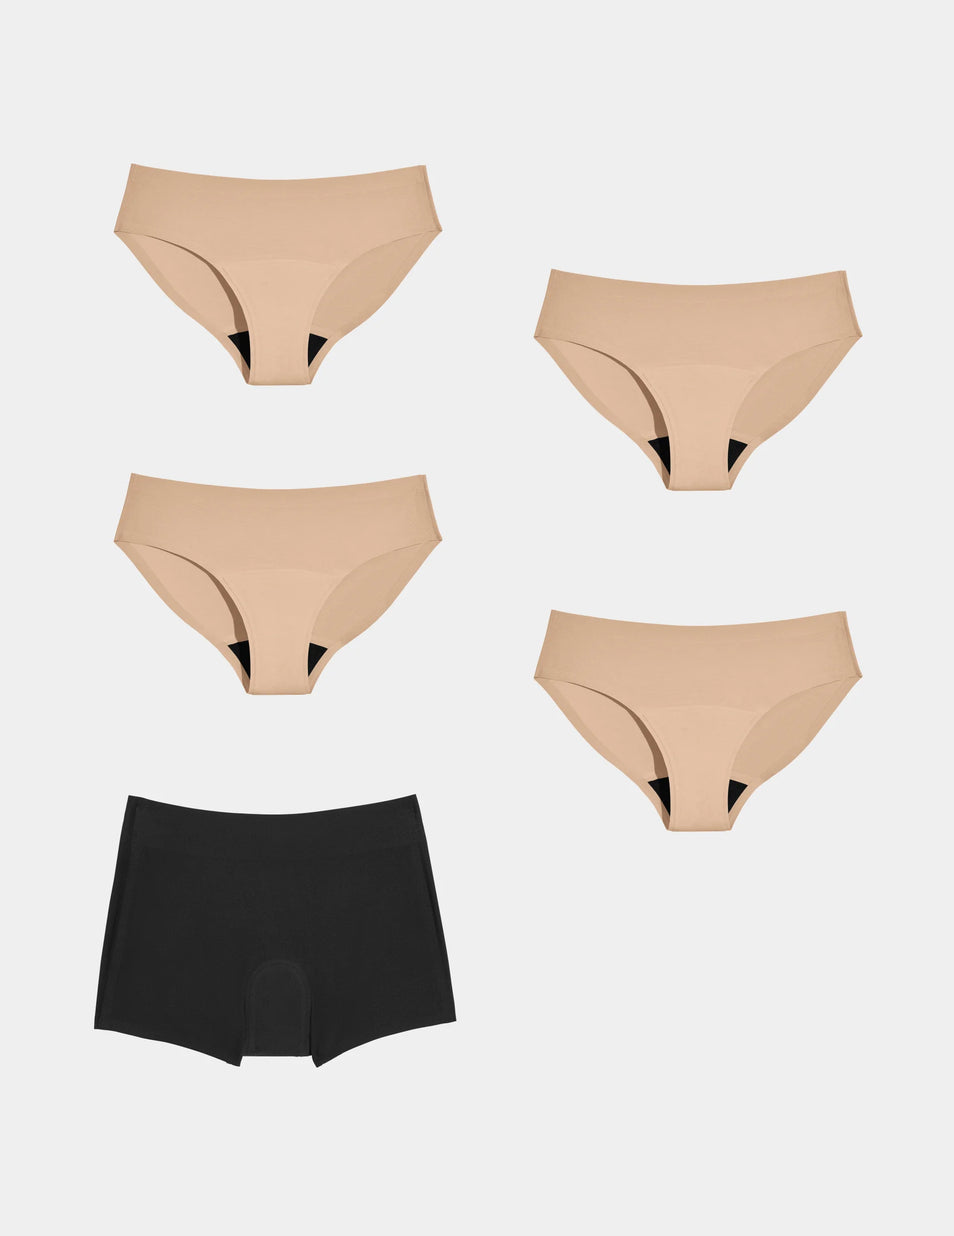 Buy Seamless Athletic Boyshorts Underwear Online – Knix